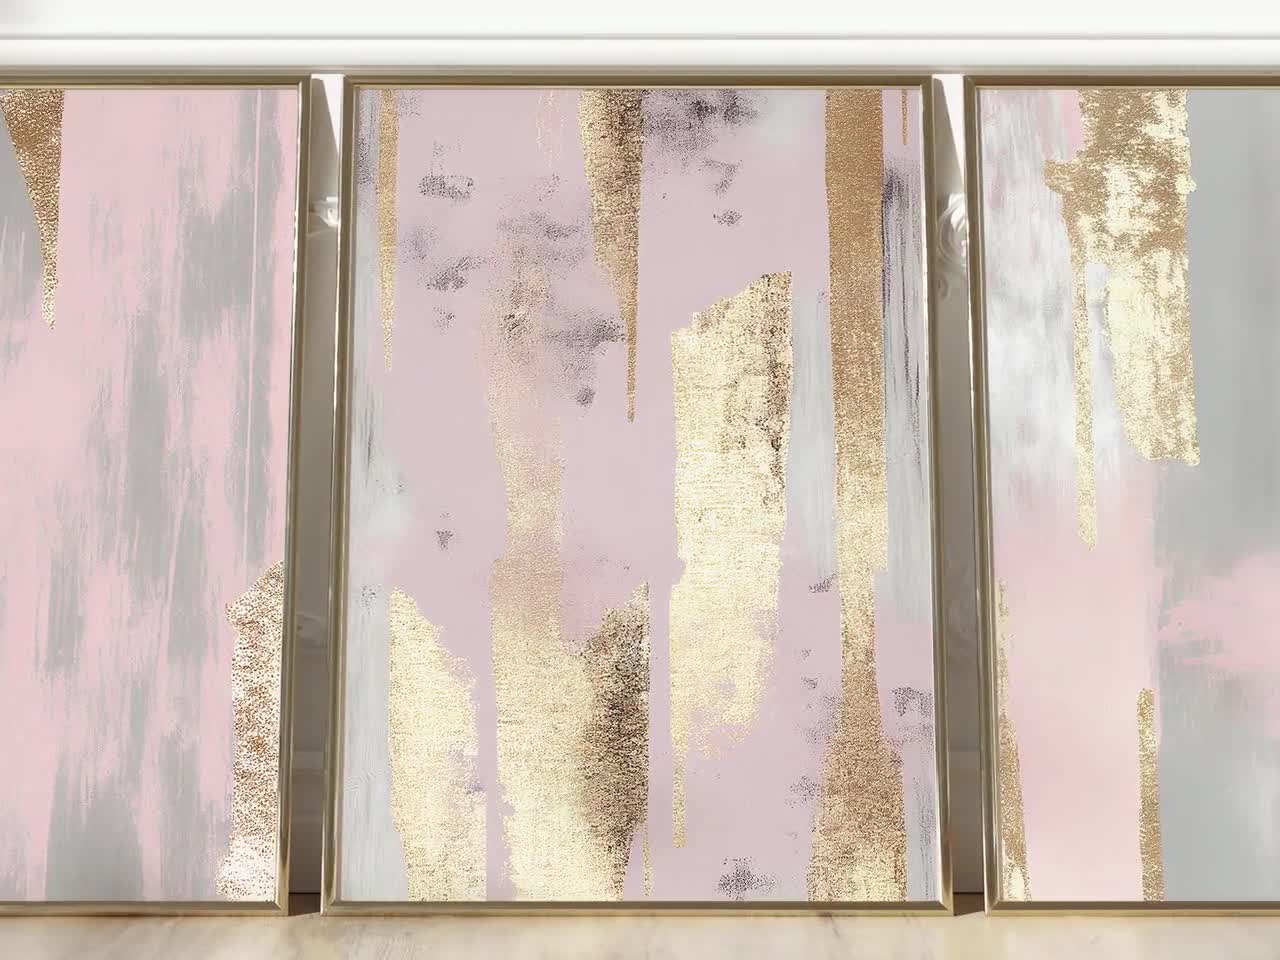 Set of 3 Modern Brush Set of - Room Etsy Room Prints, Decor, Art, Pink 3 Set Prints, Gold Abstract Living Wall Stroke Abstract Bedroom Blush Print